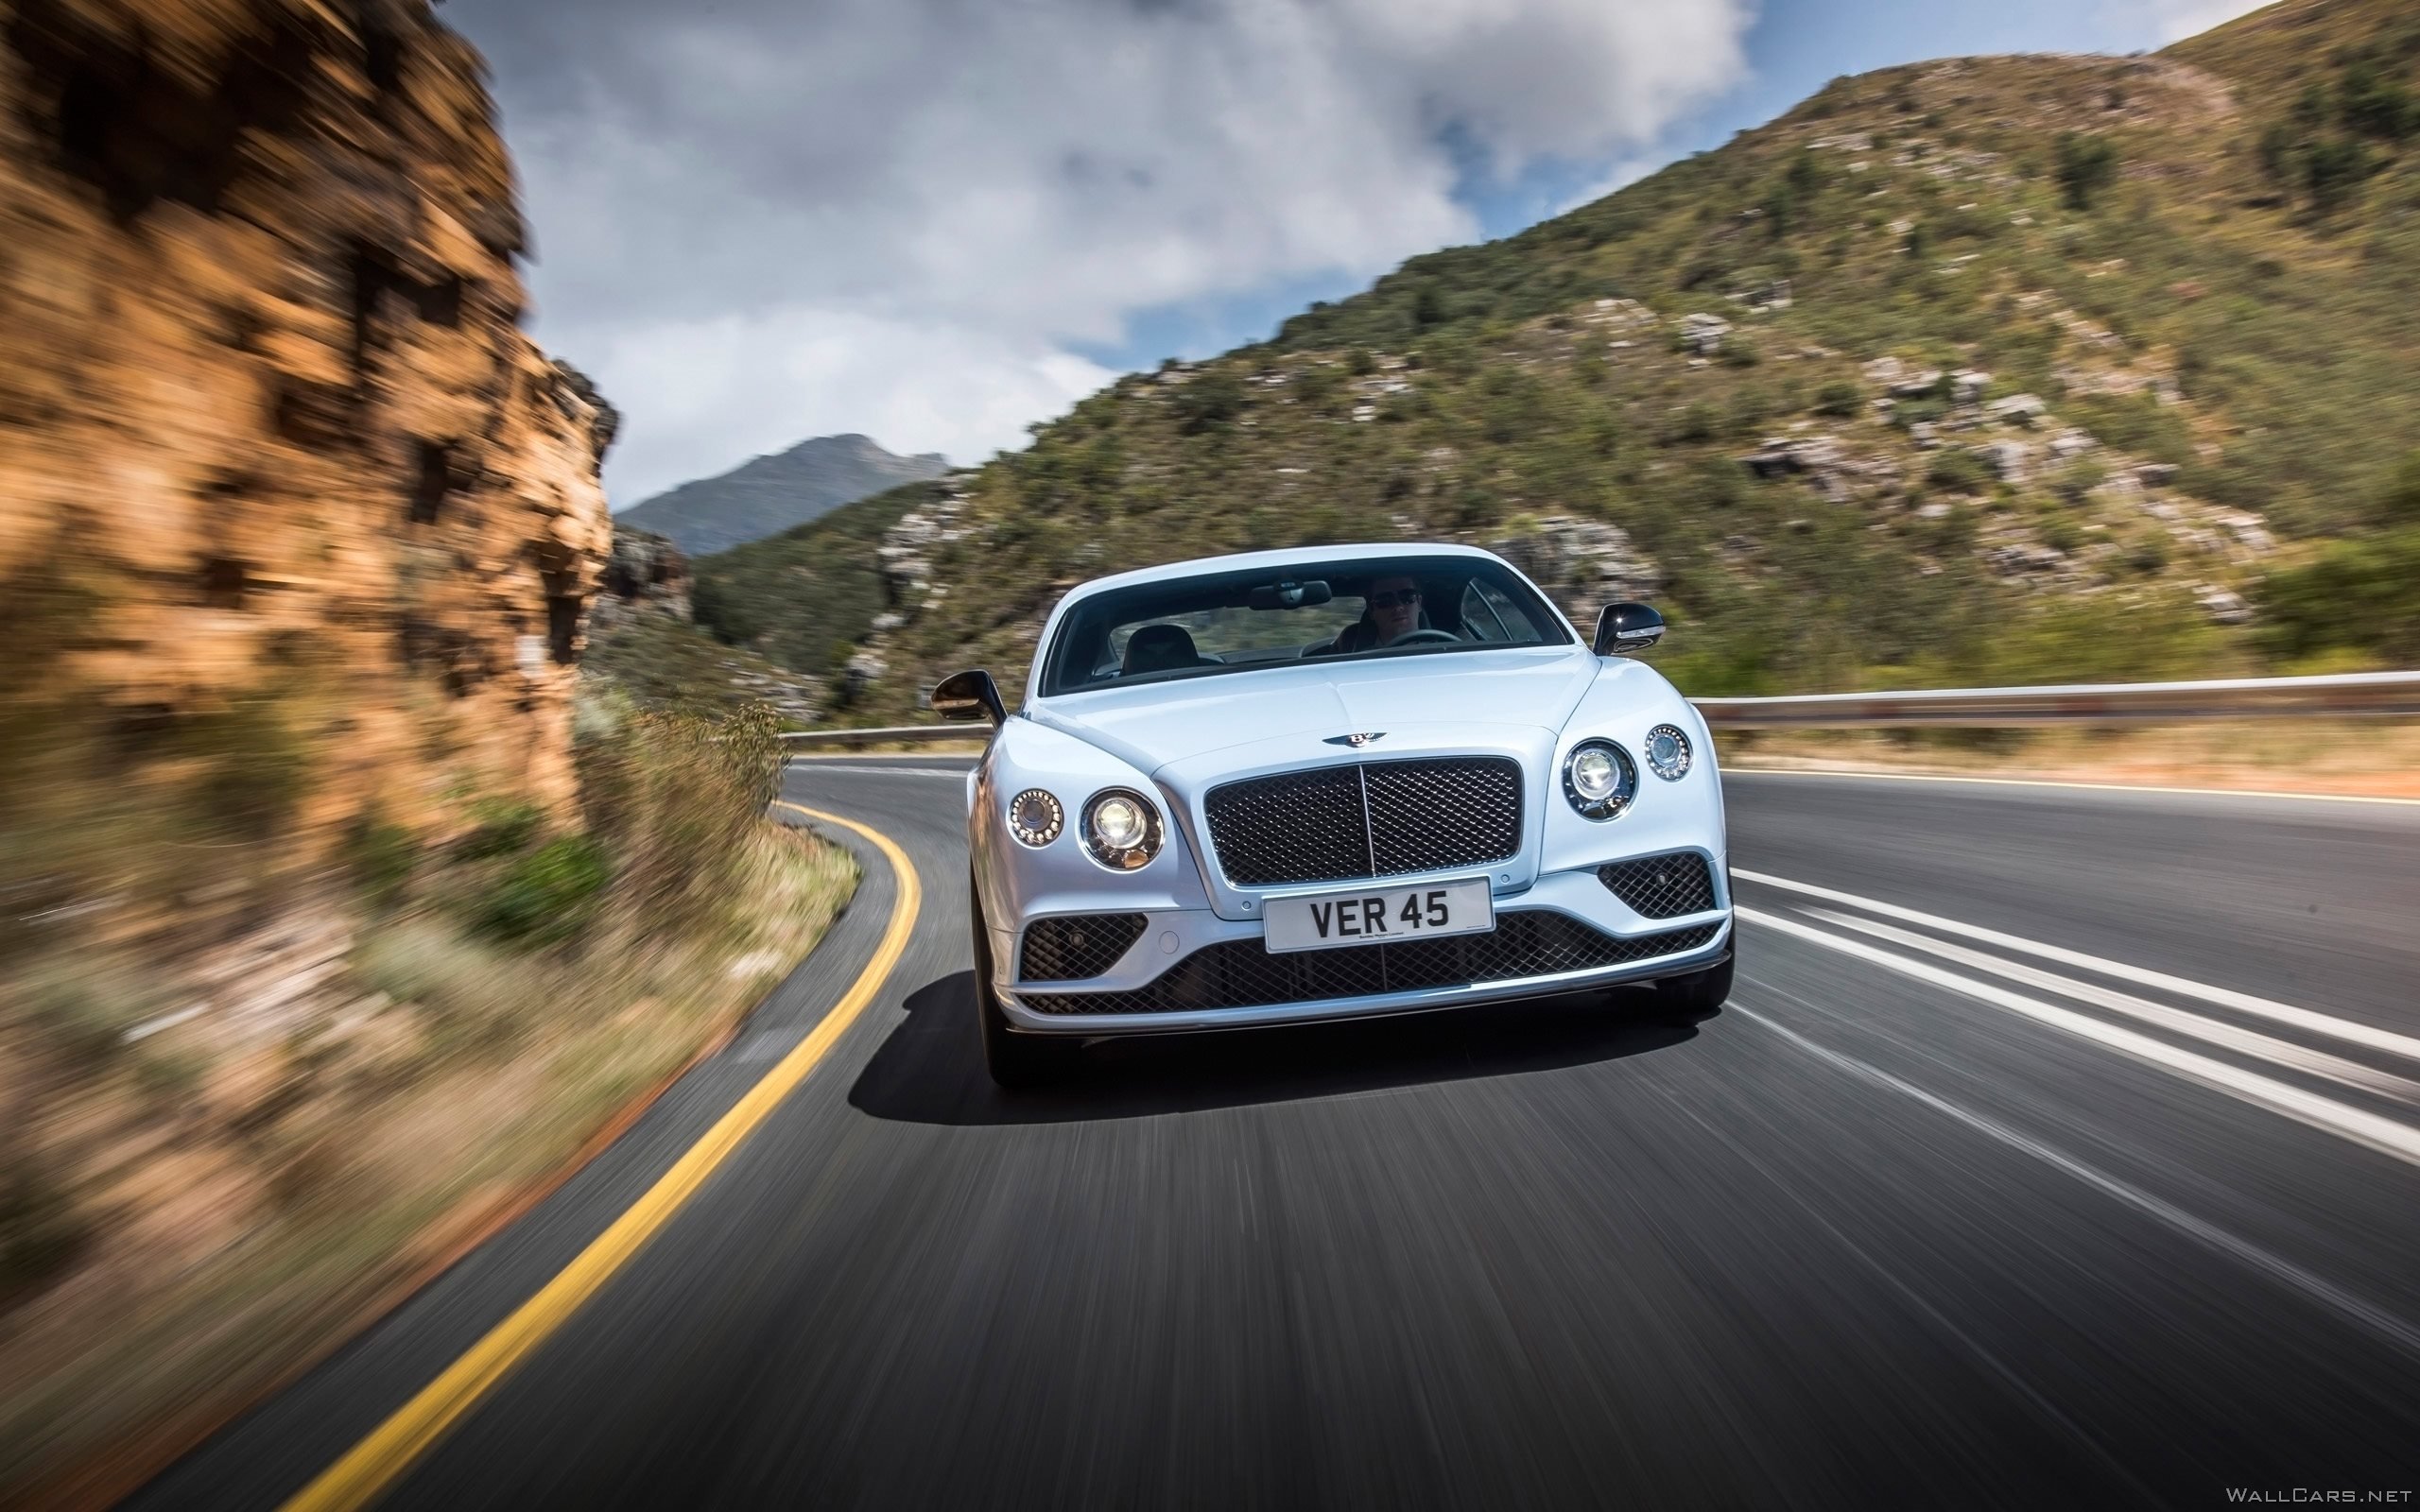 Анфас, фото, белый Бэнтли, Bentley Continental V8 GT S,  2015, фары, трасса, природа